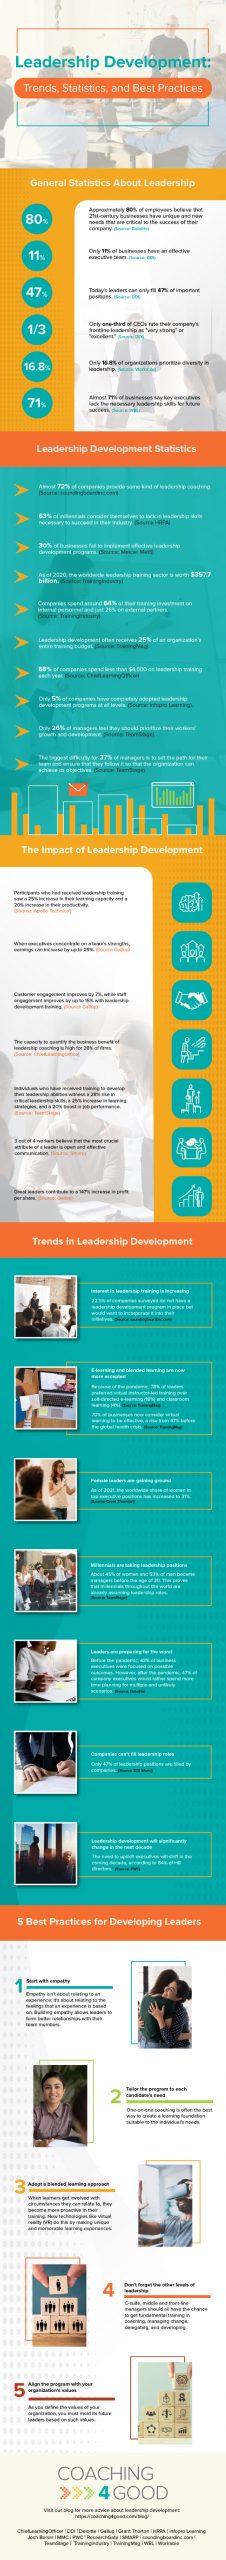 trends in leadership development c4g infographic